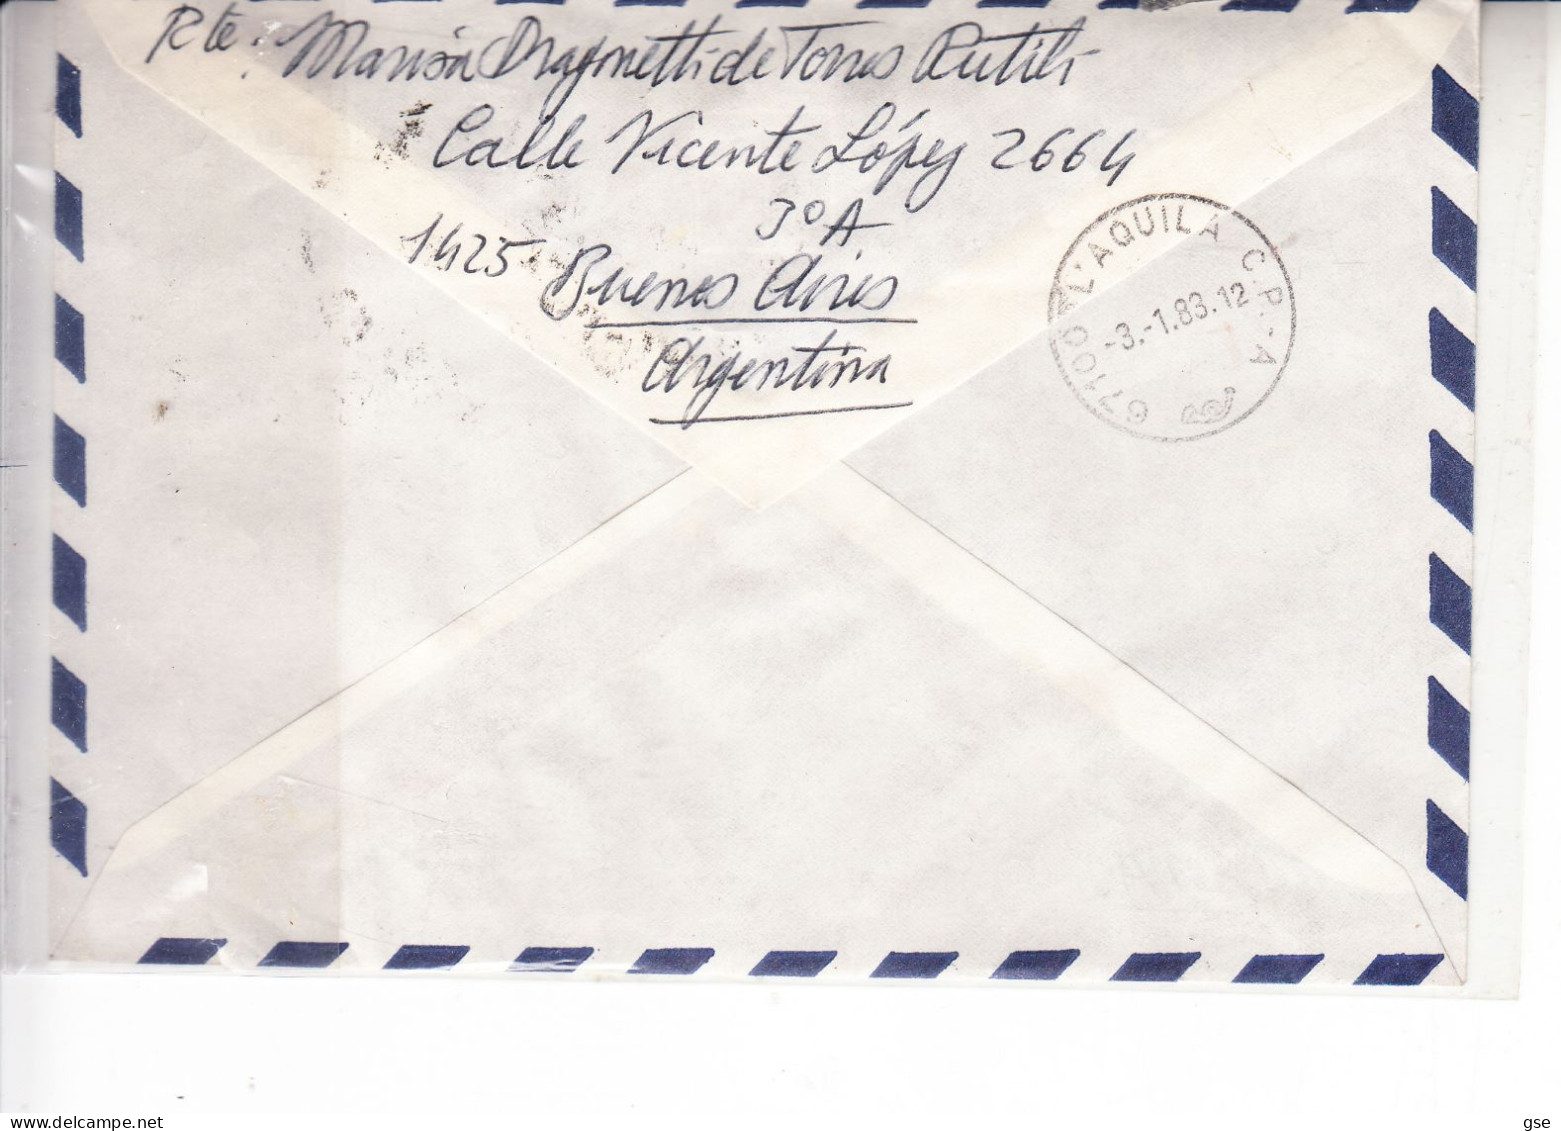 ARGENTINA  1983 - Yvert 1293 (oechidea) Su Lettera Per Italia - Covers & Documents